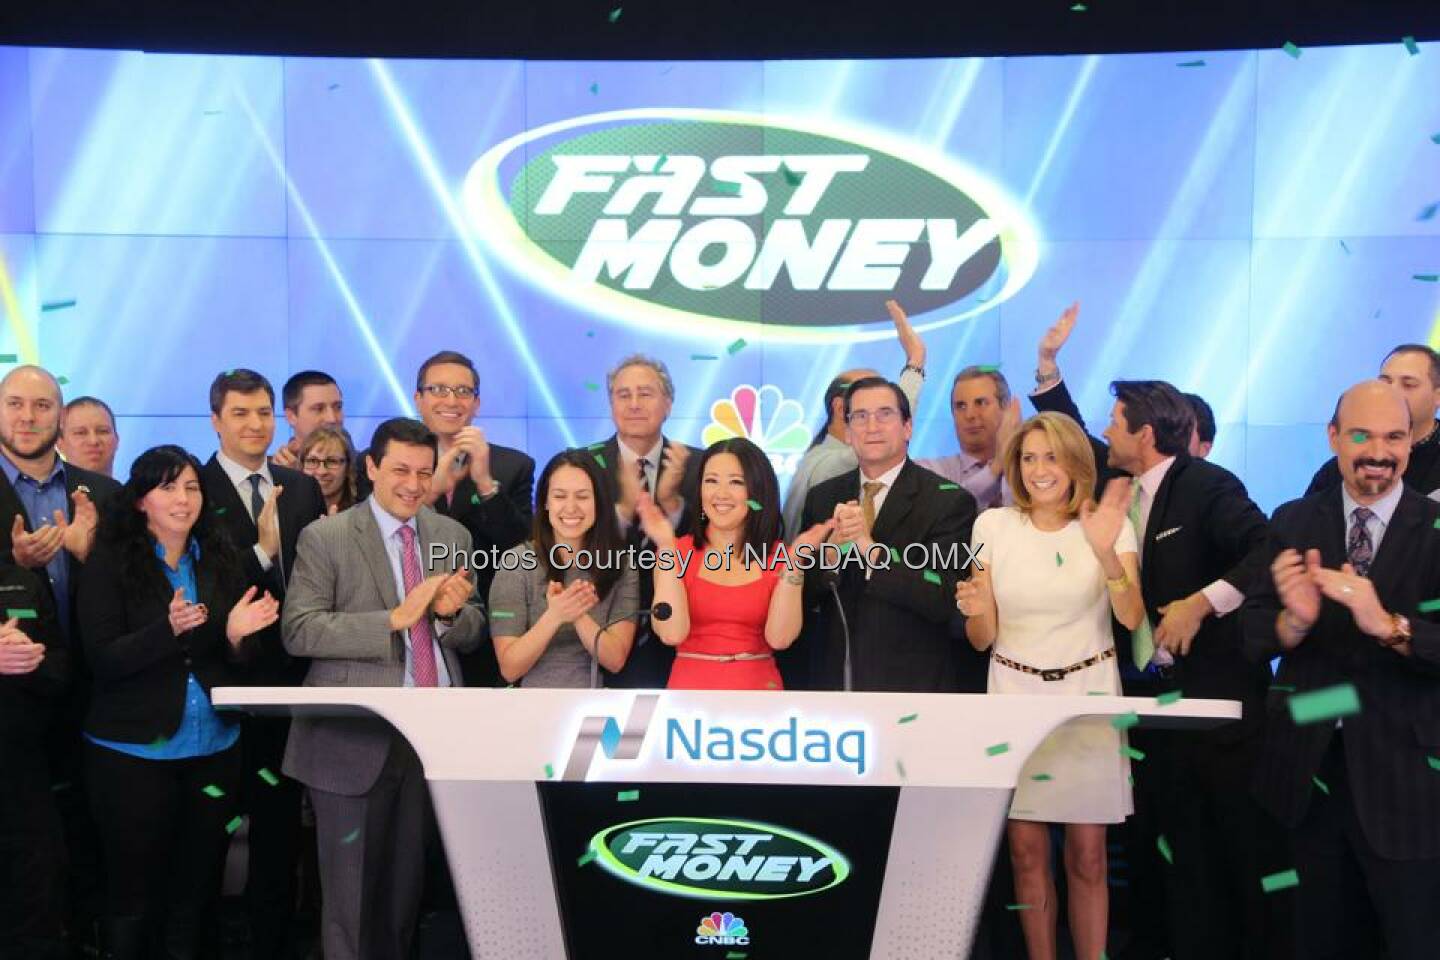 CNBC Fast Money rang the Nasdaq Closing Bell in celebration of their 8th Anniversary! #HappyAnniversary  Source: http://facebook.com/NASDAQ